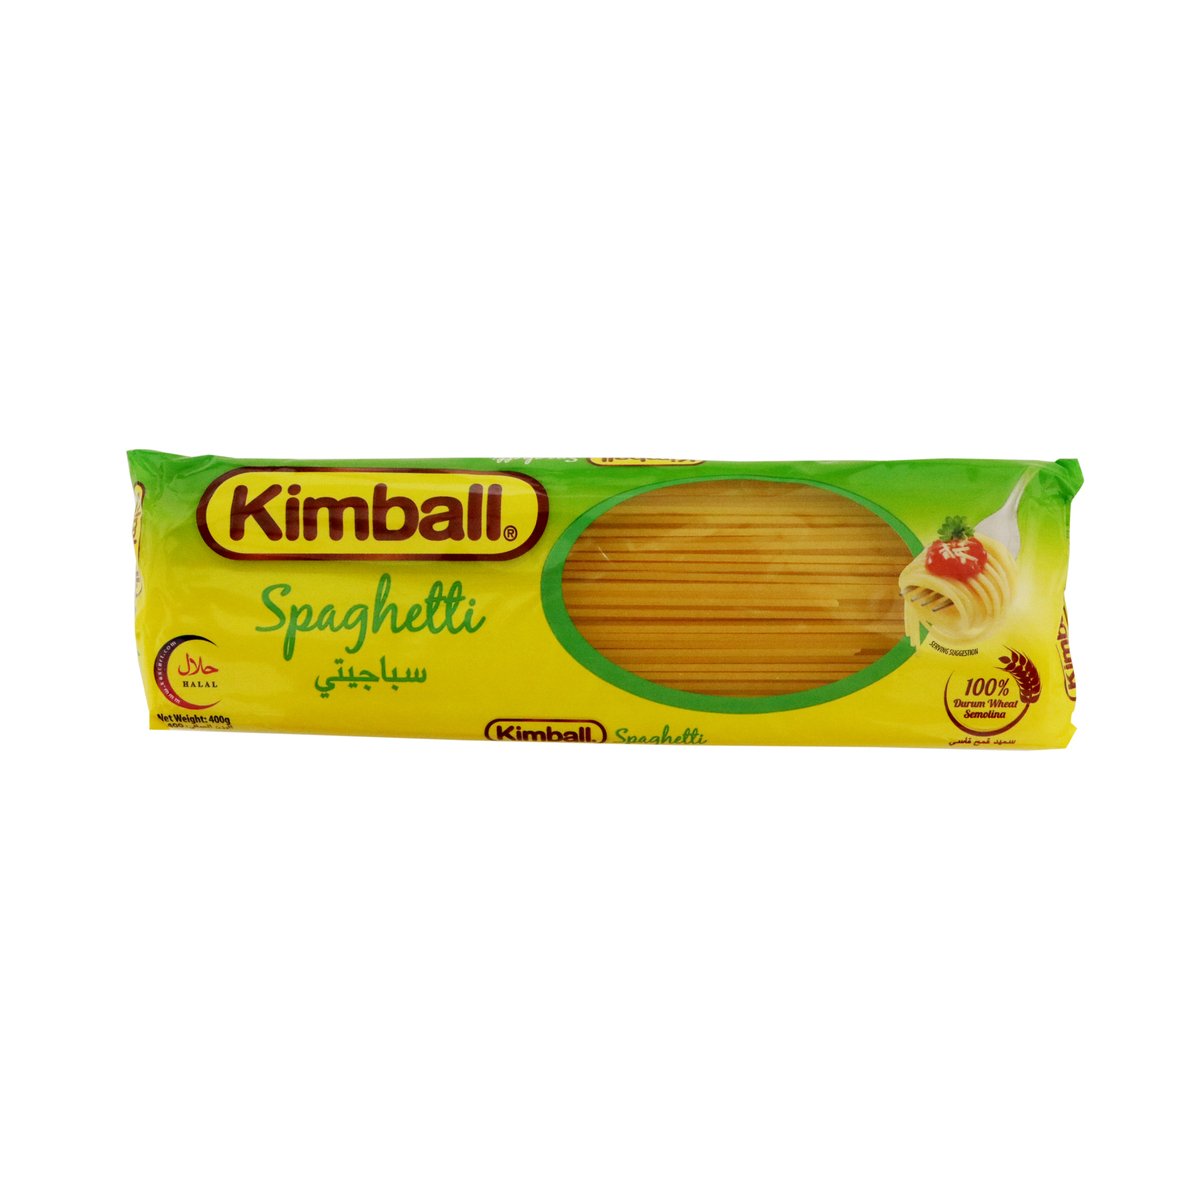 Kimball Spaghetti 400g